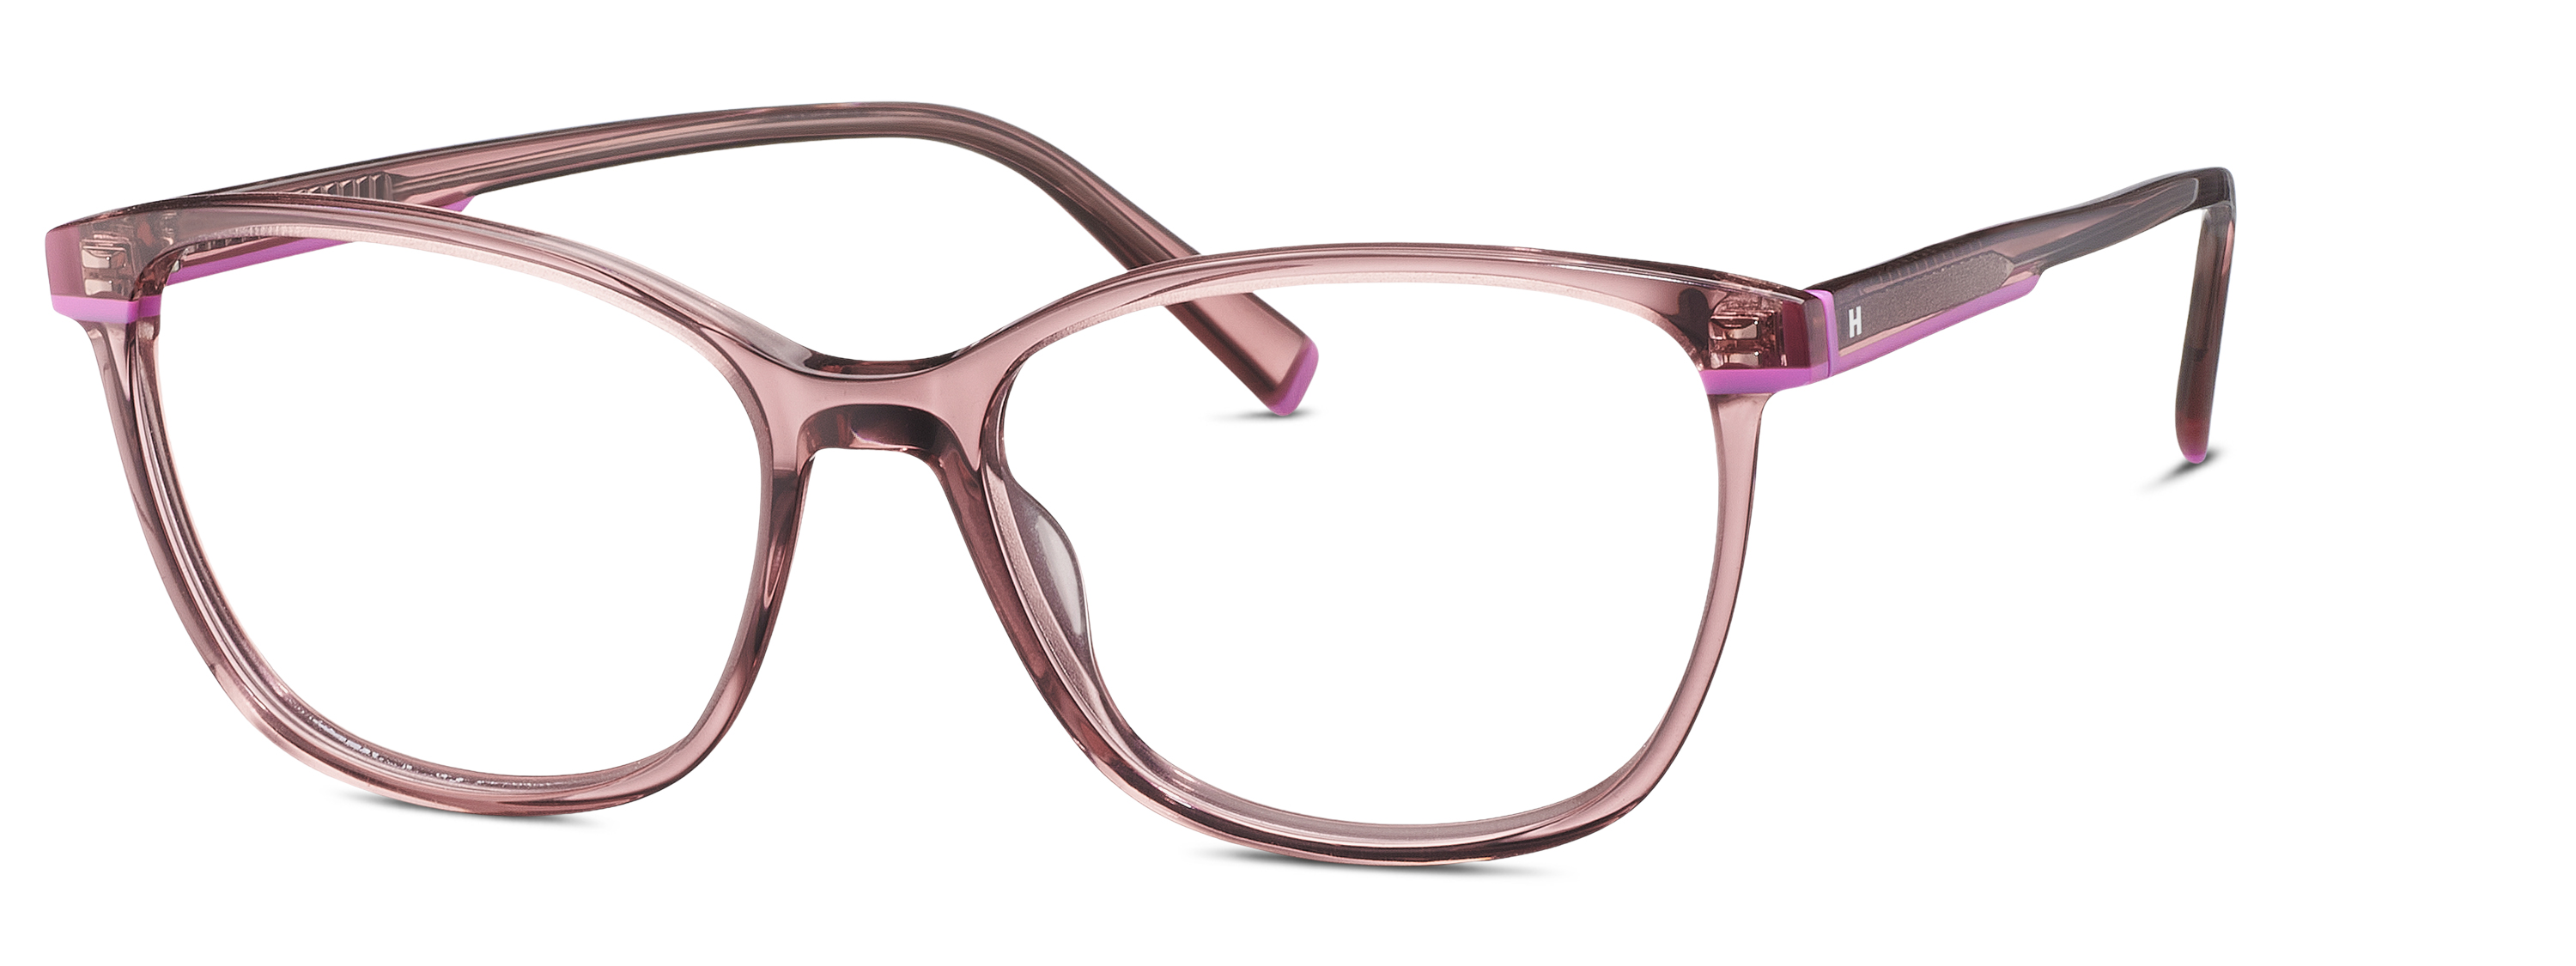 Front HUMPHREY´S eyewear 583160 50 Brille Rosa, Transparent